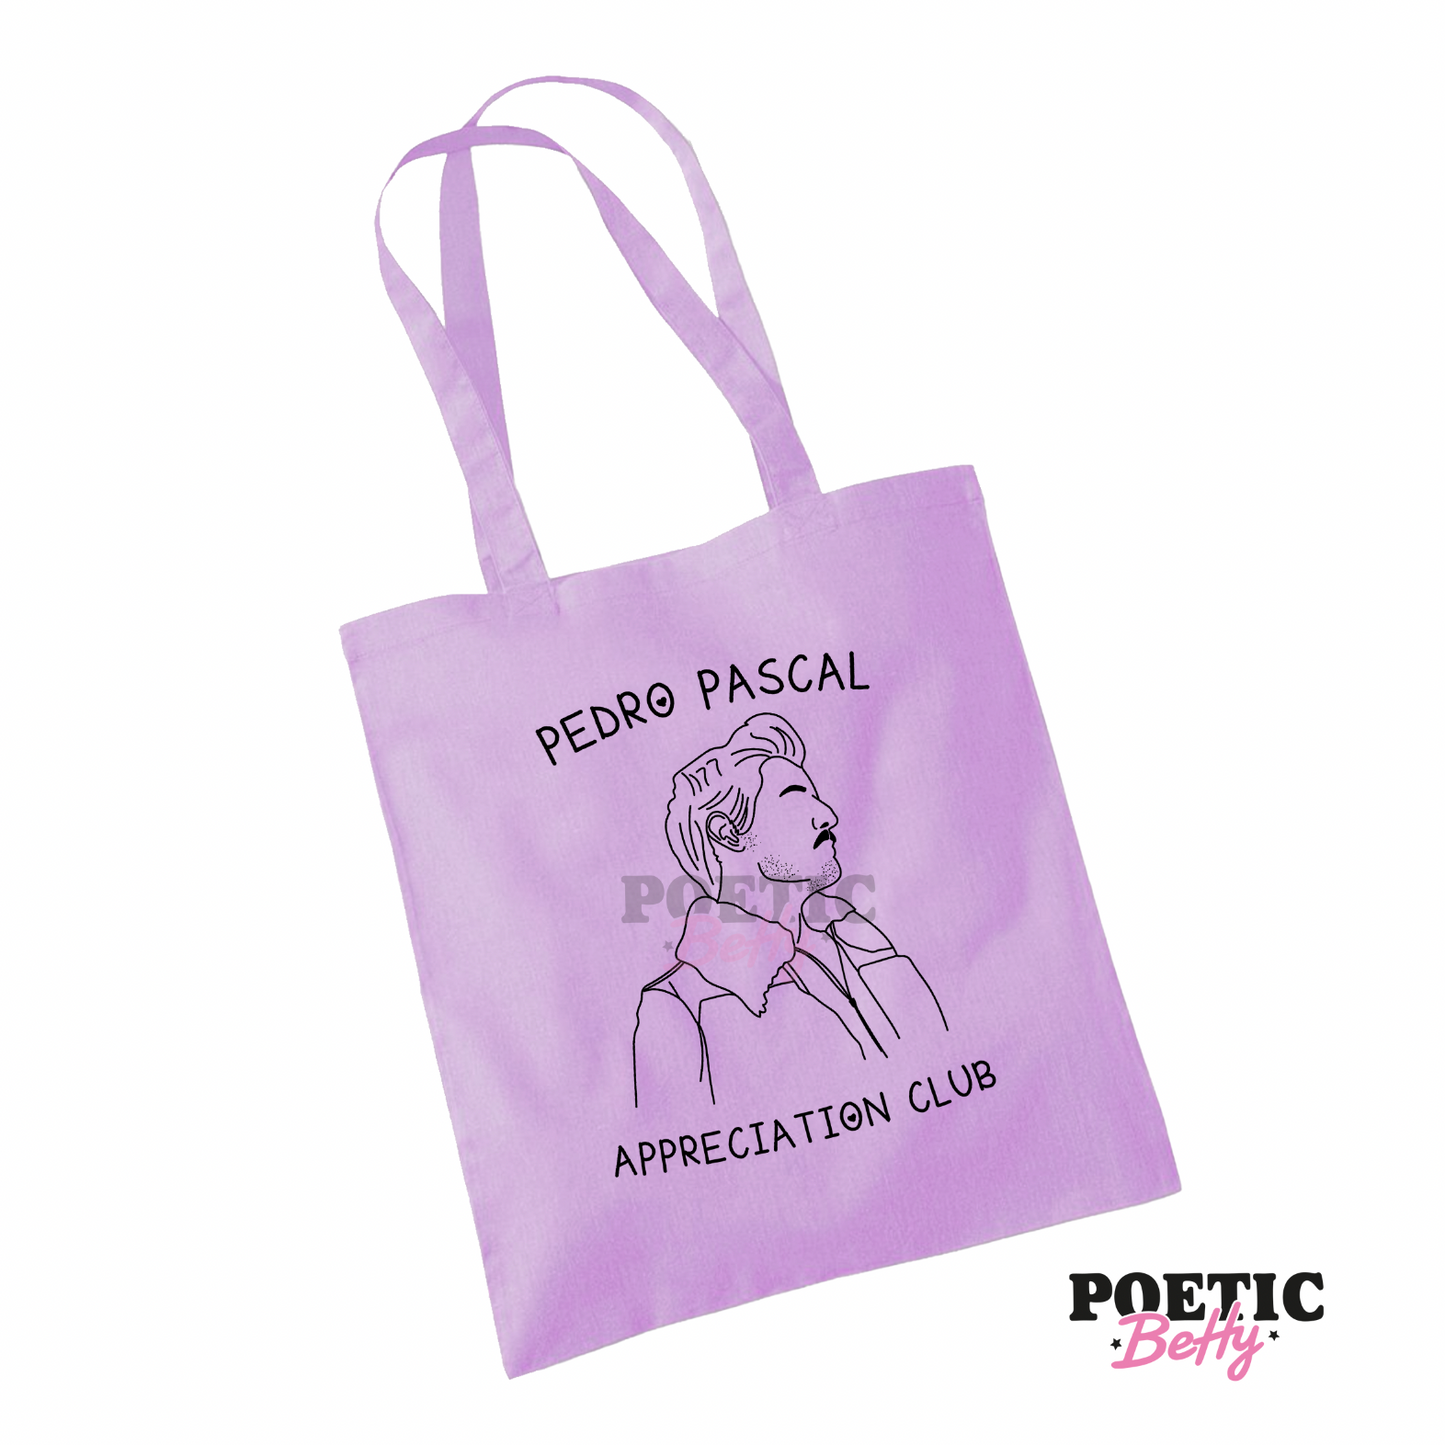 Pedro Pascal Appreciation Club Lavender Pink 100% Cotton Tote Bag